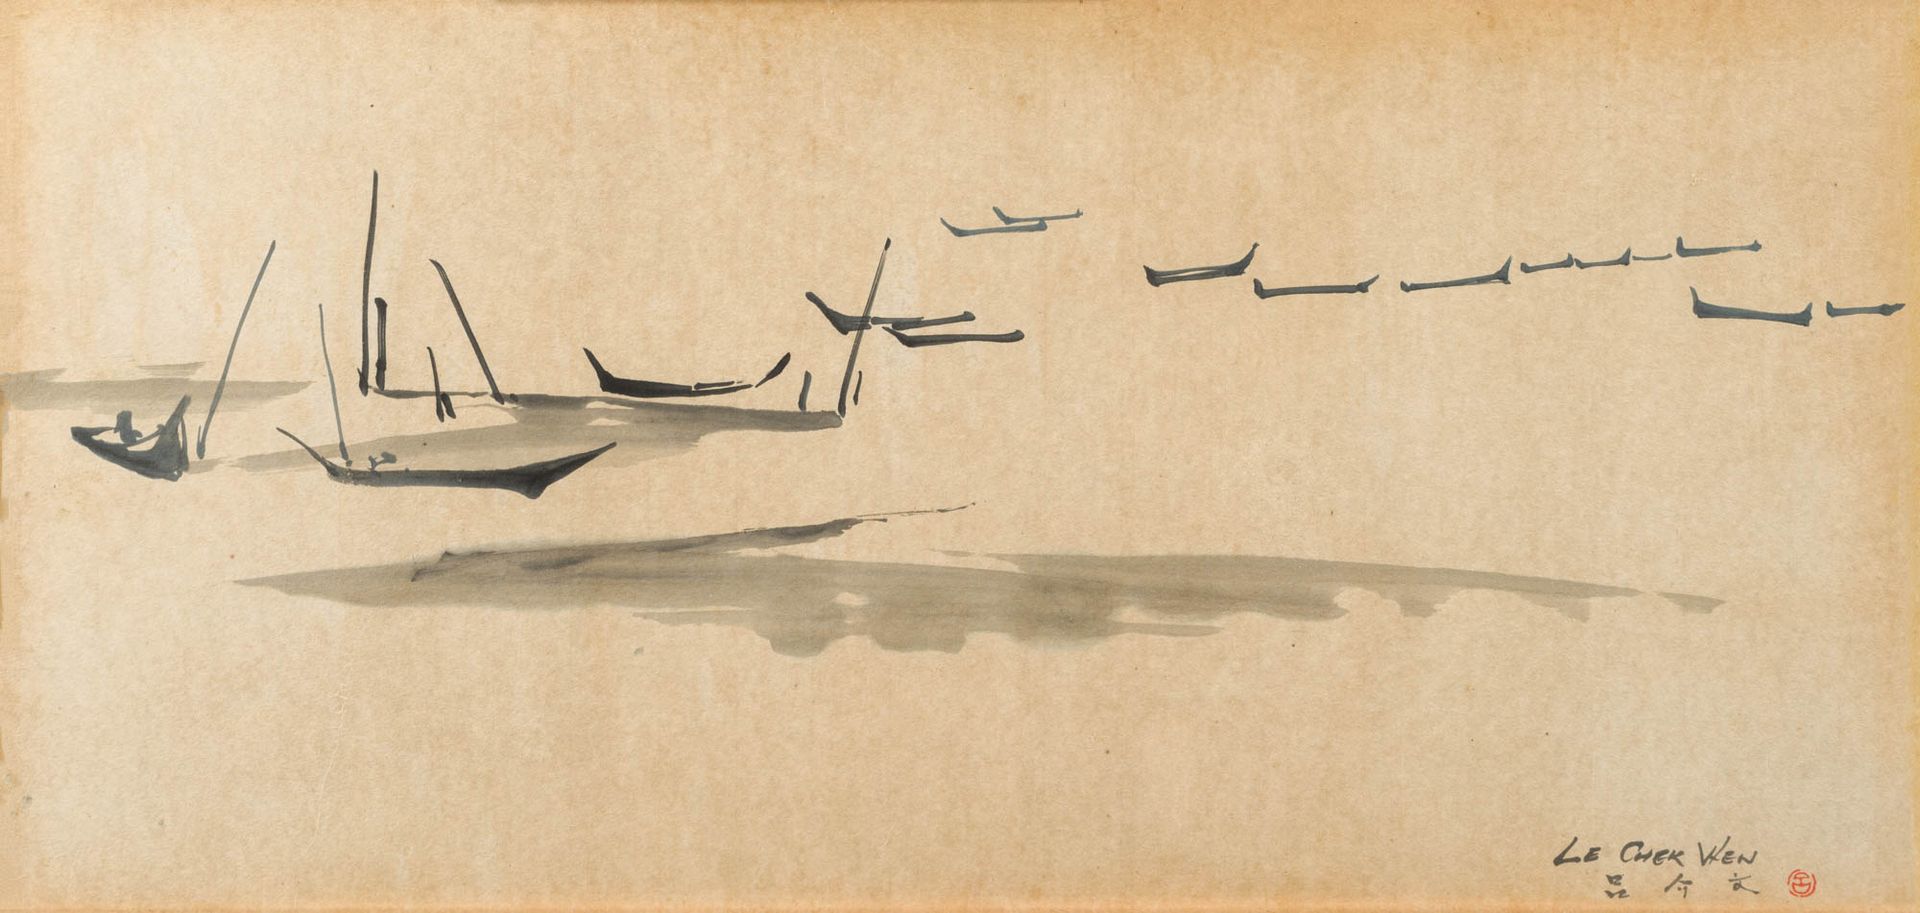 Le Chek Wen 1934–1988 黎志文 1934-1988

海滨

纸上水墨

右下角有签名：LE CHECK WEN

背面的艺术家标签上刻有L&hellip;